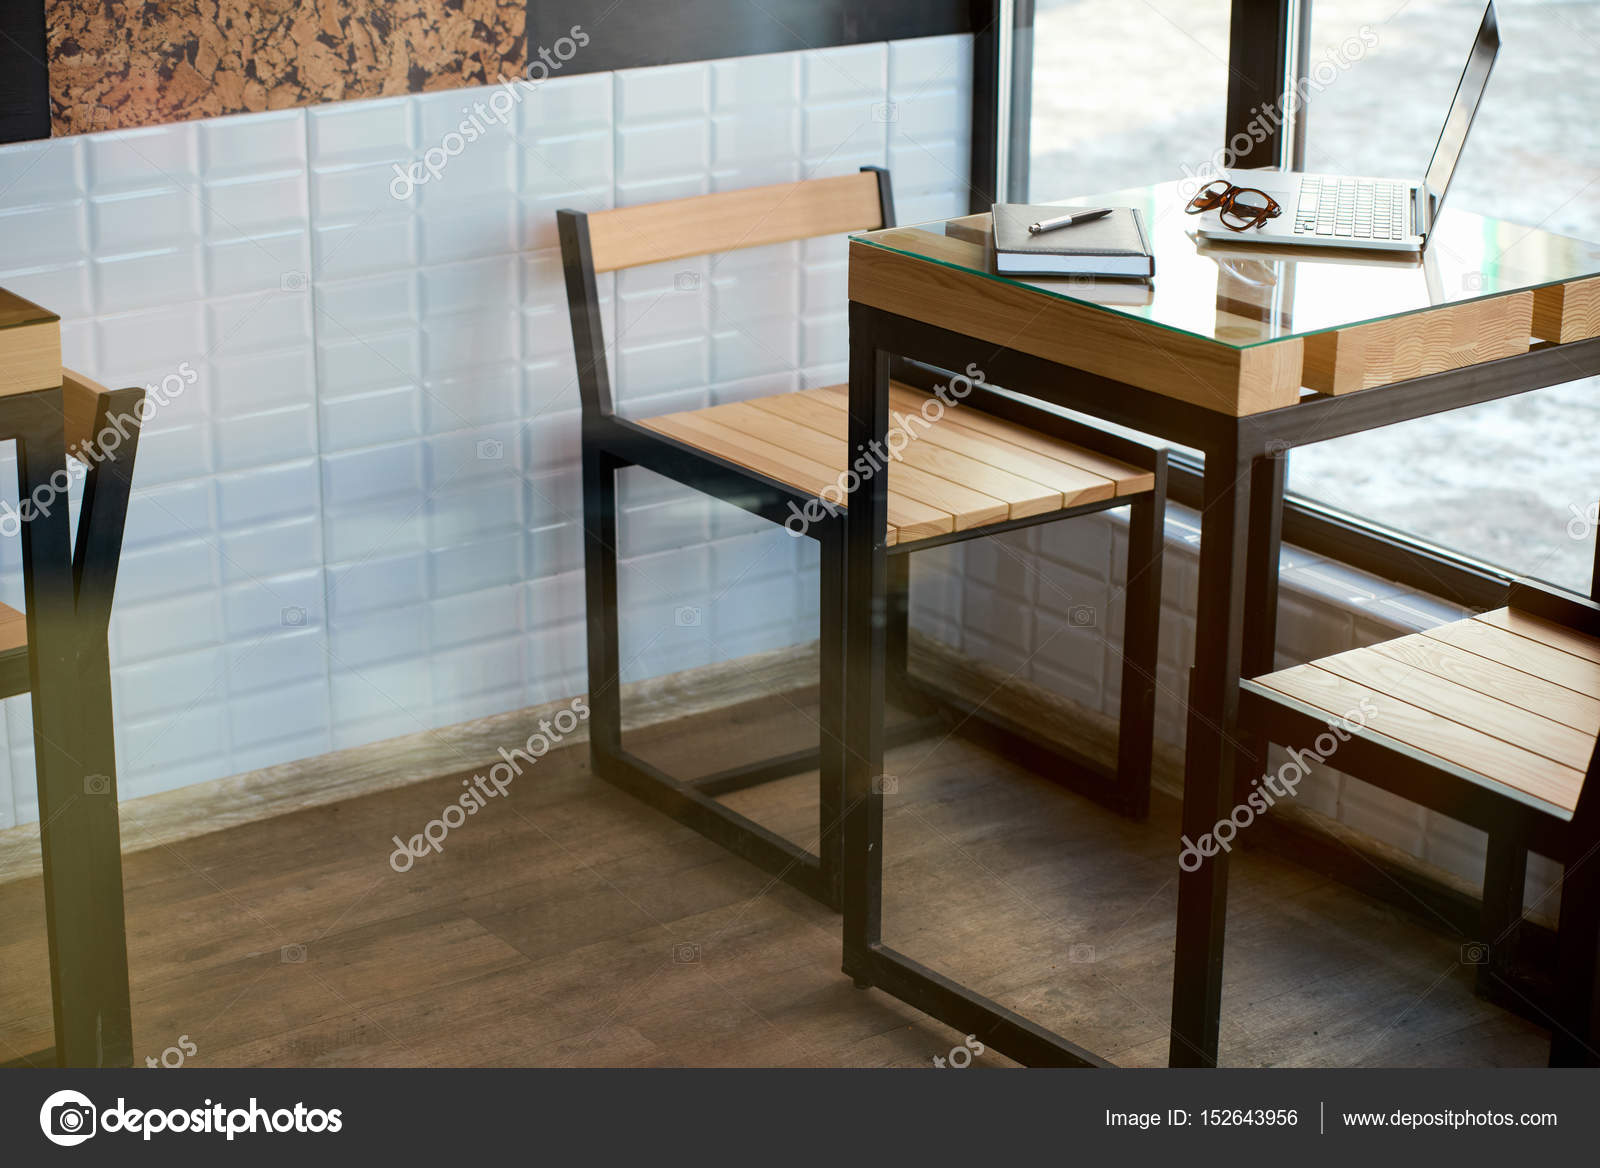 Cafe Interior And Freelance Work Place Stock Photo C Sata